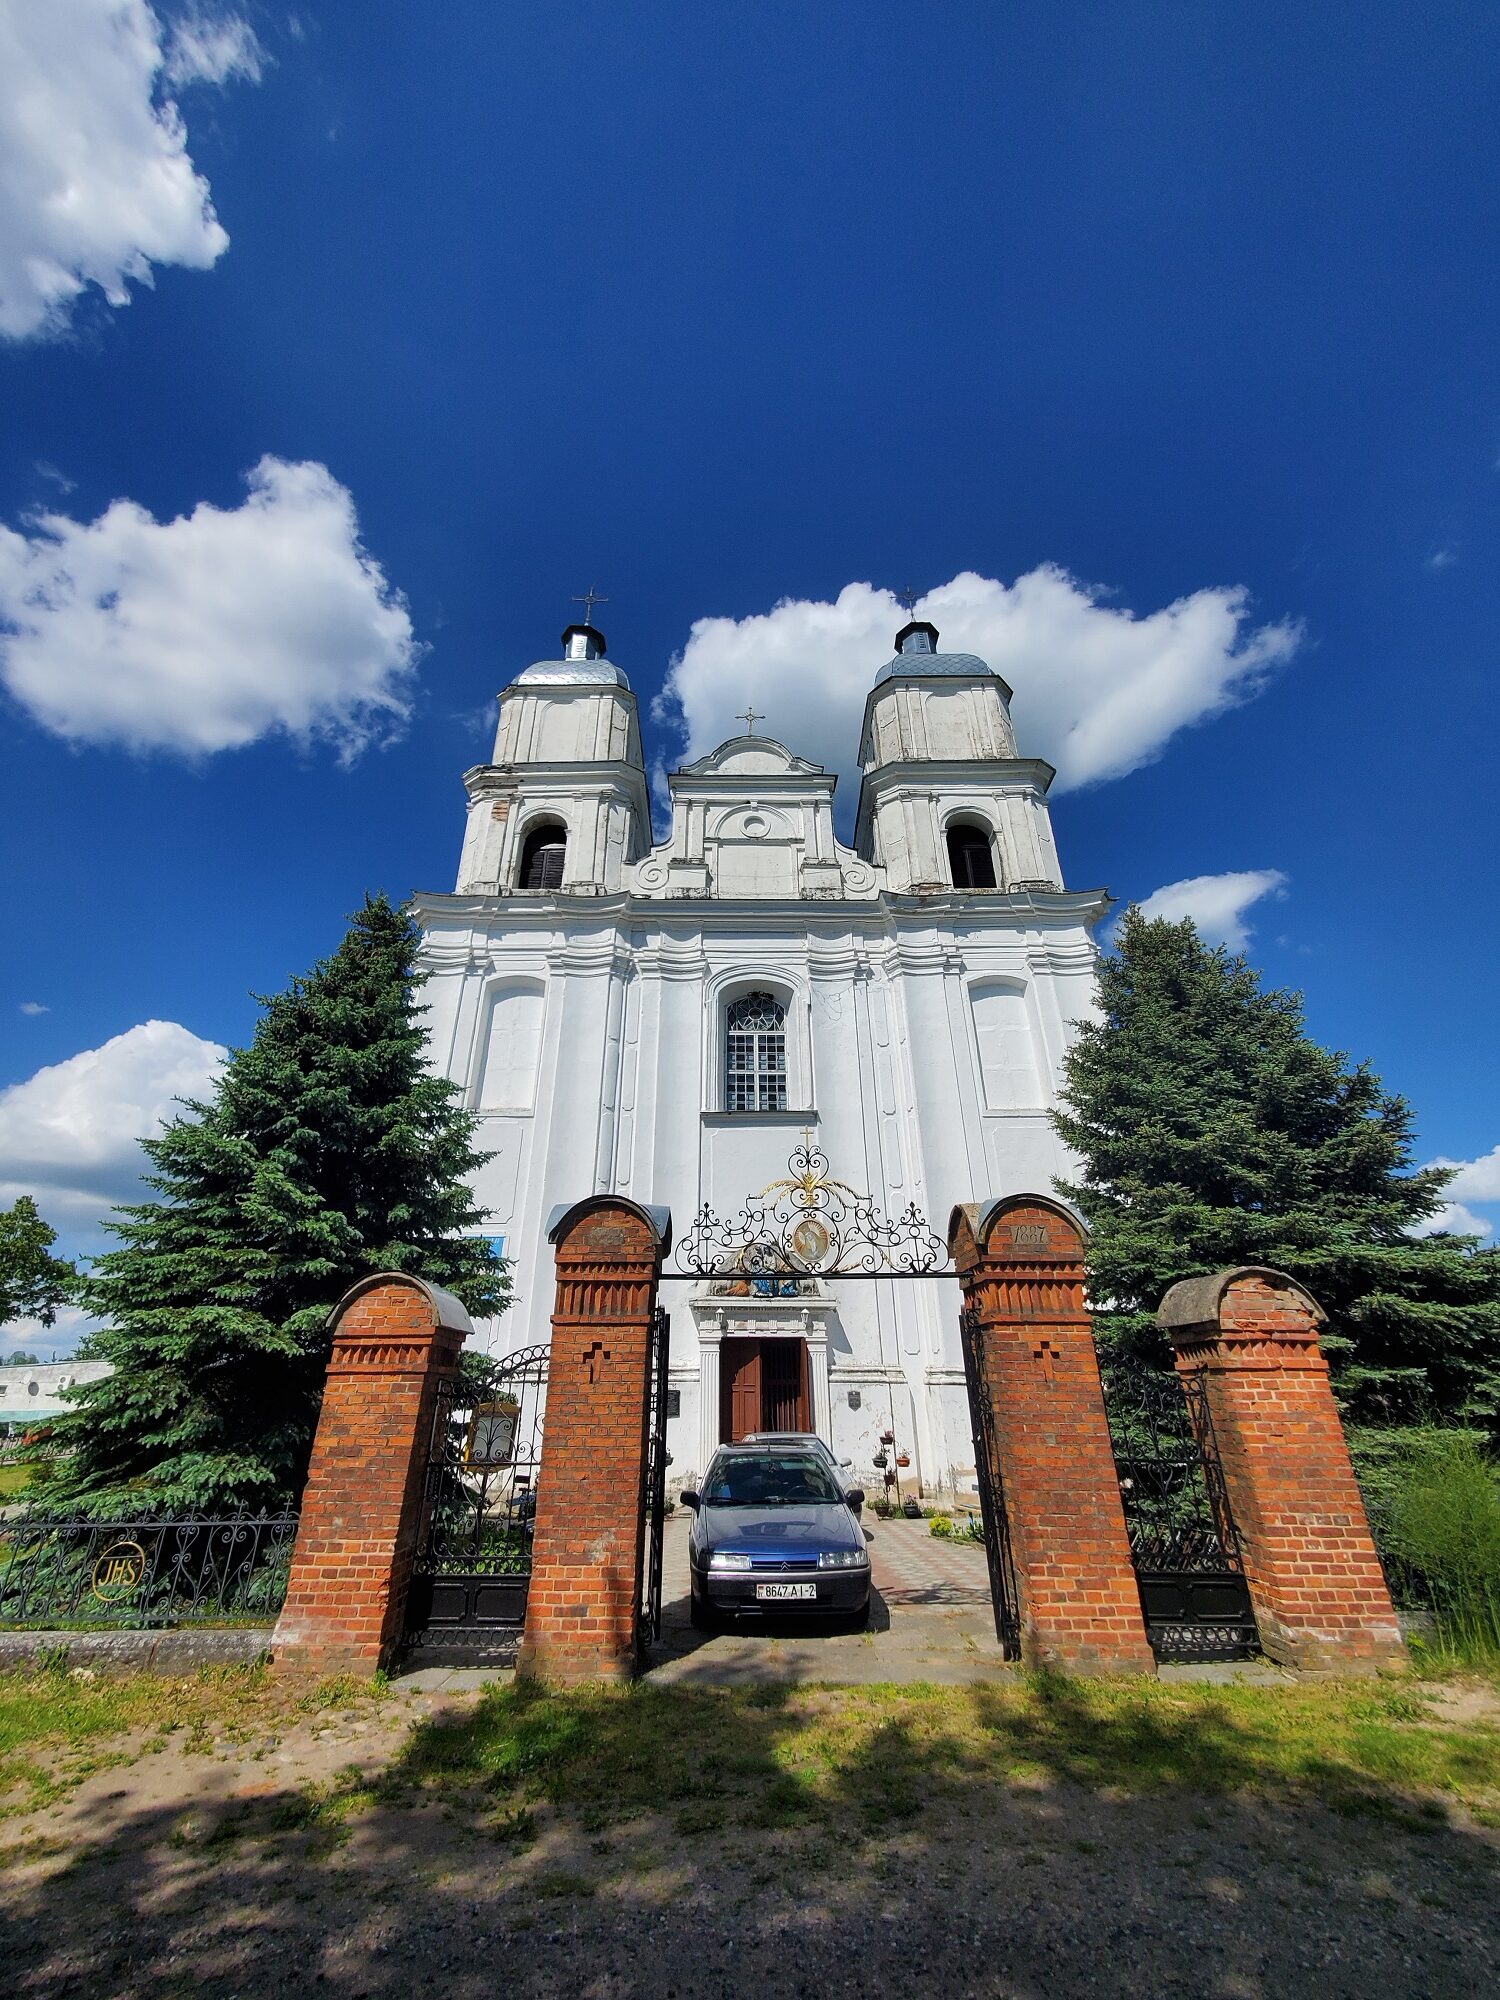 20200606 150823 1 rotated - Костел Святой Троицы в деревне Дуниловичи